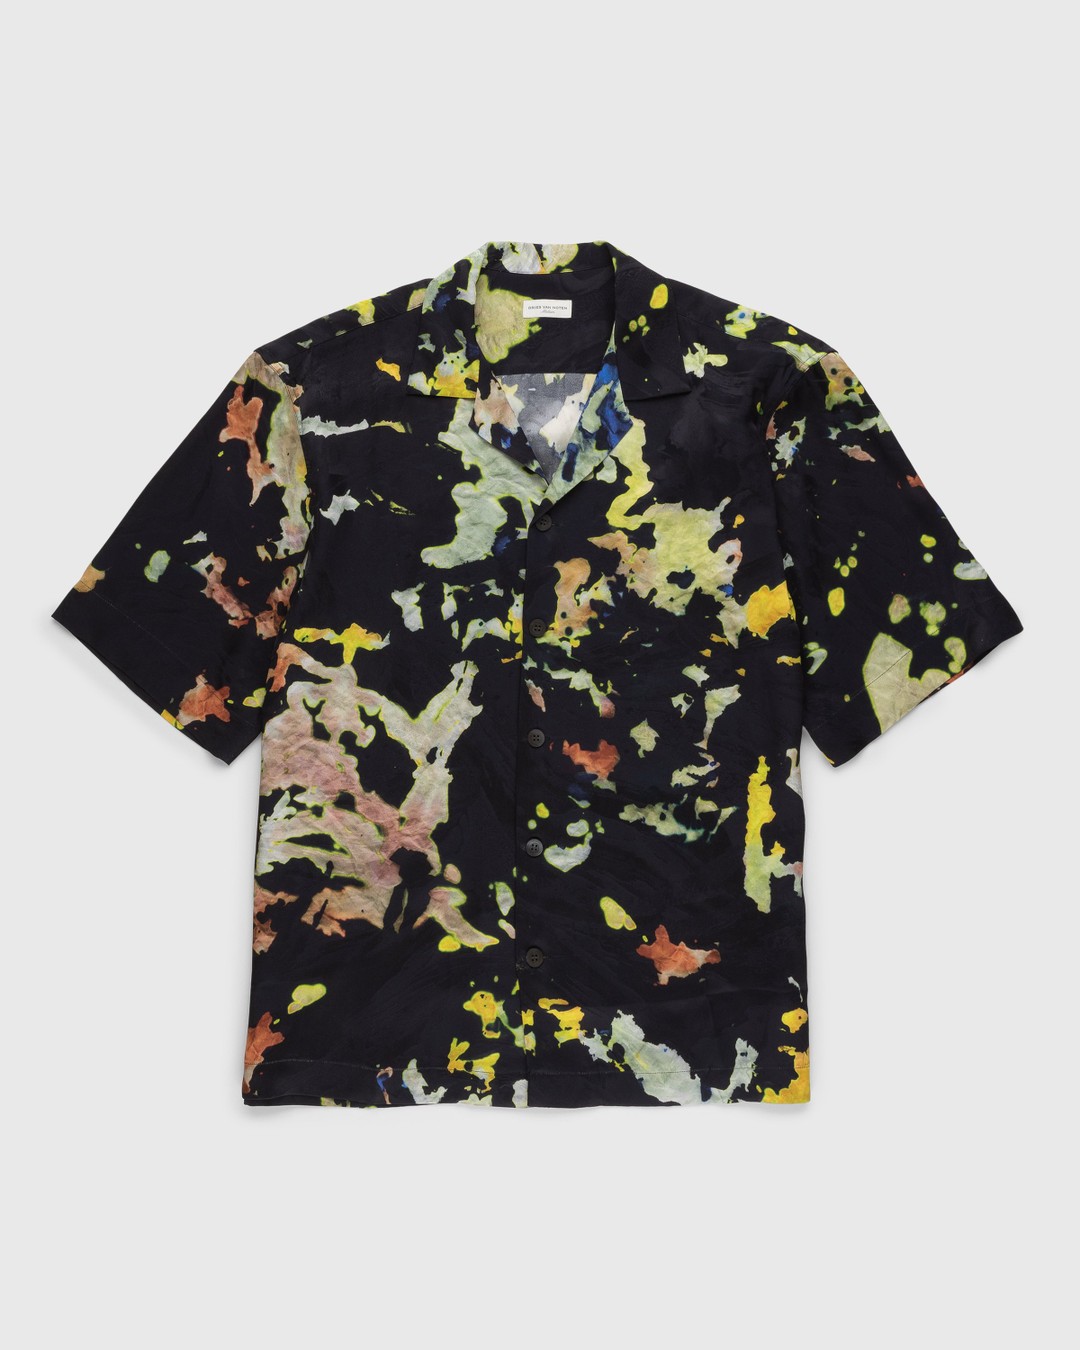 Dries van Noten – Jacquard Cassi Shirt Multi - Shortsleeve Shirts - Multi - Image 1